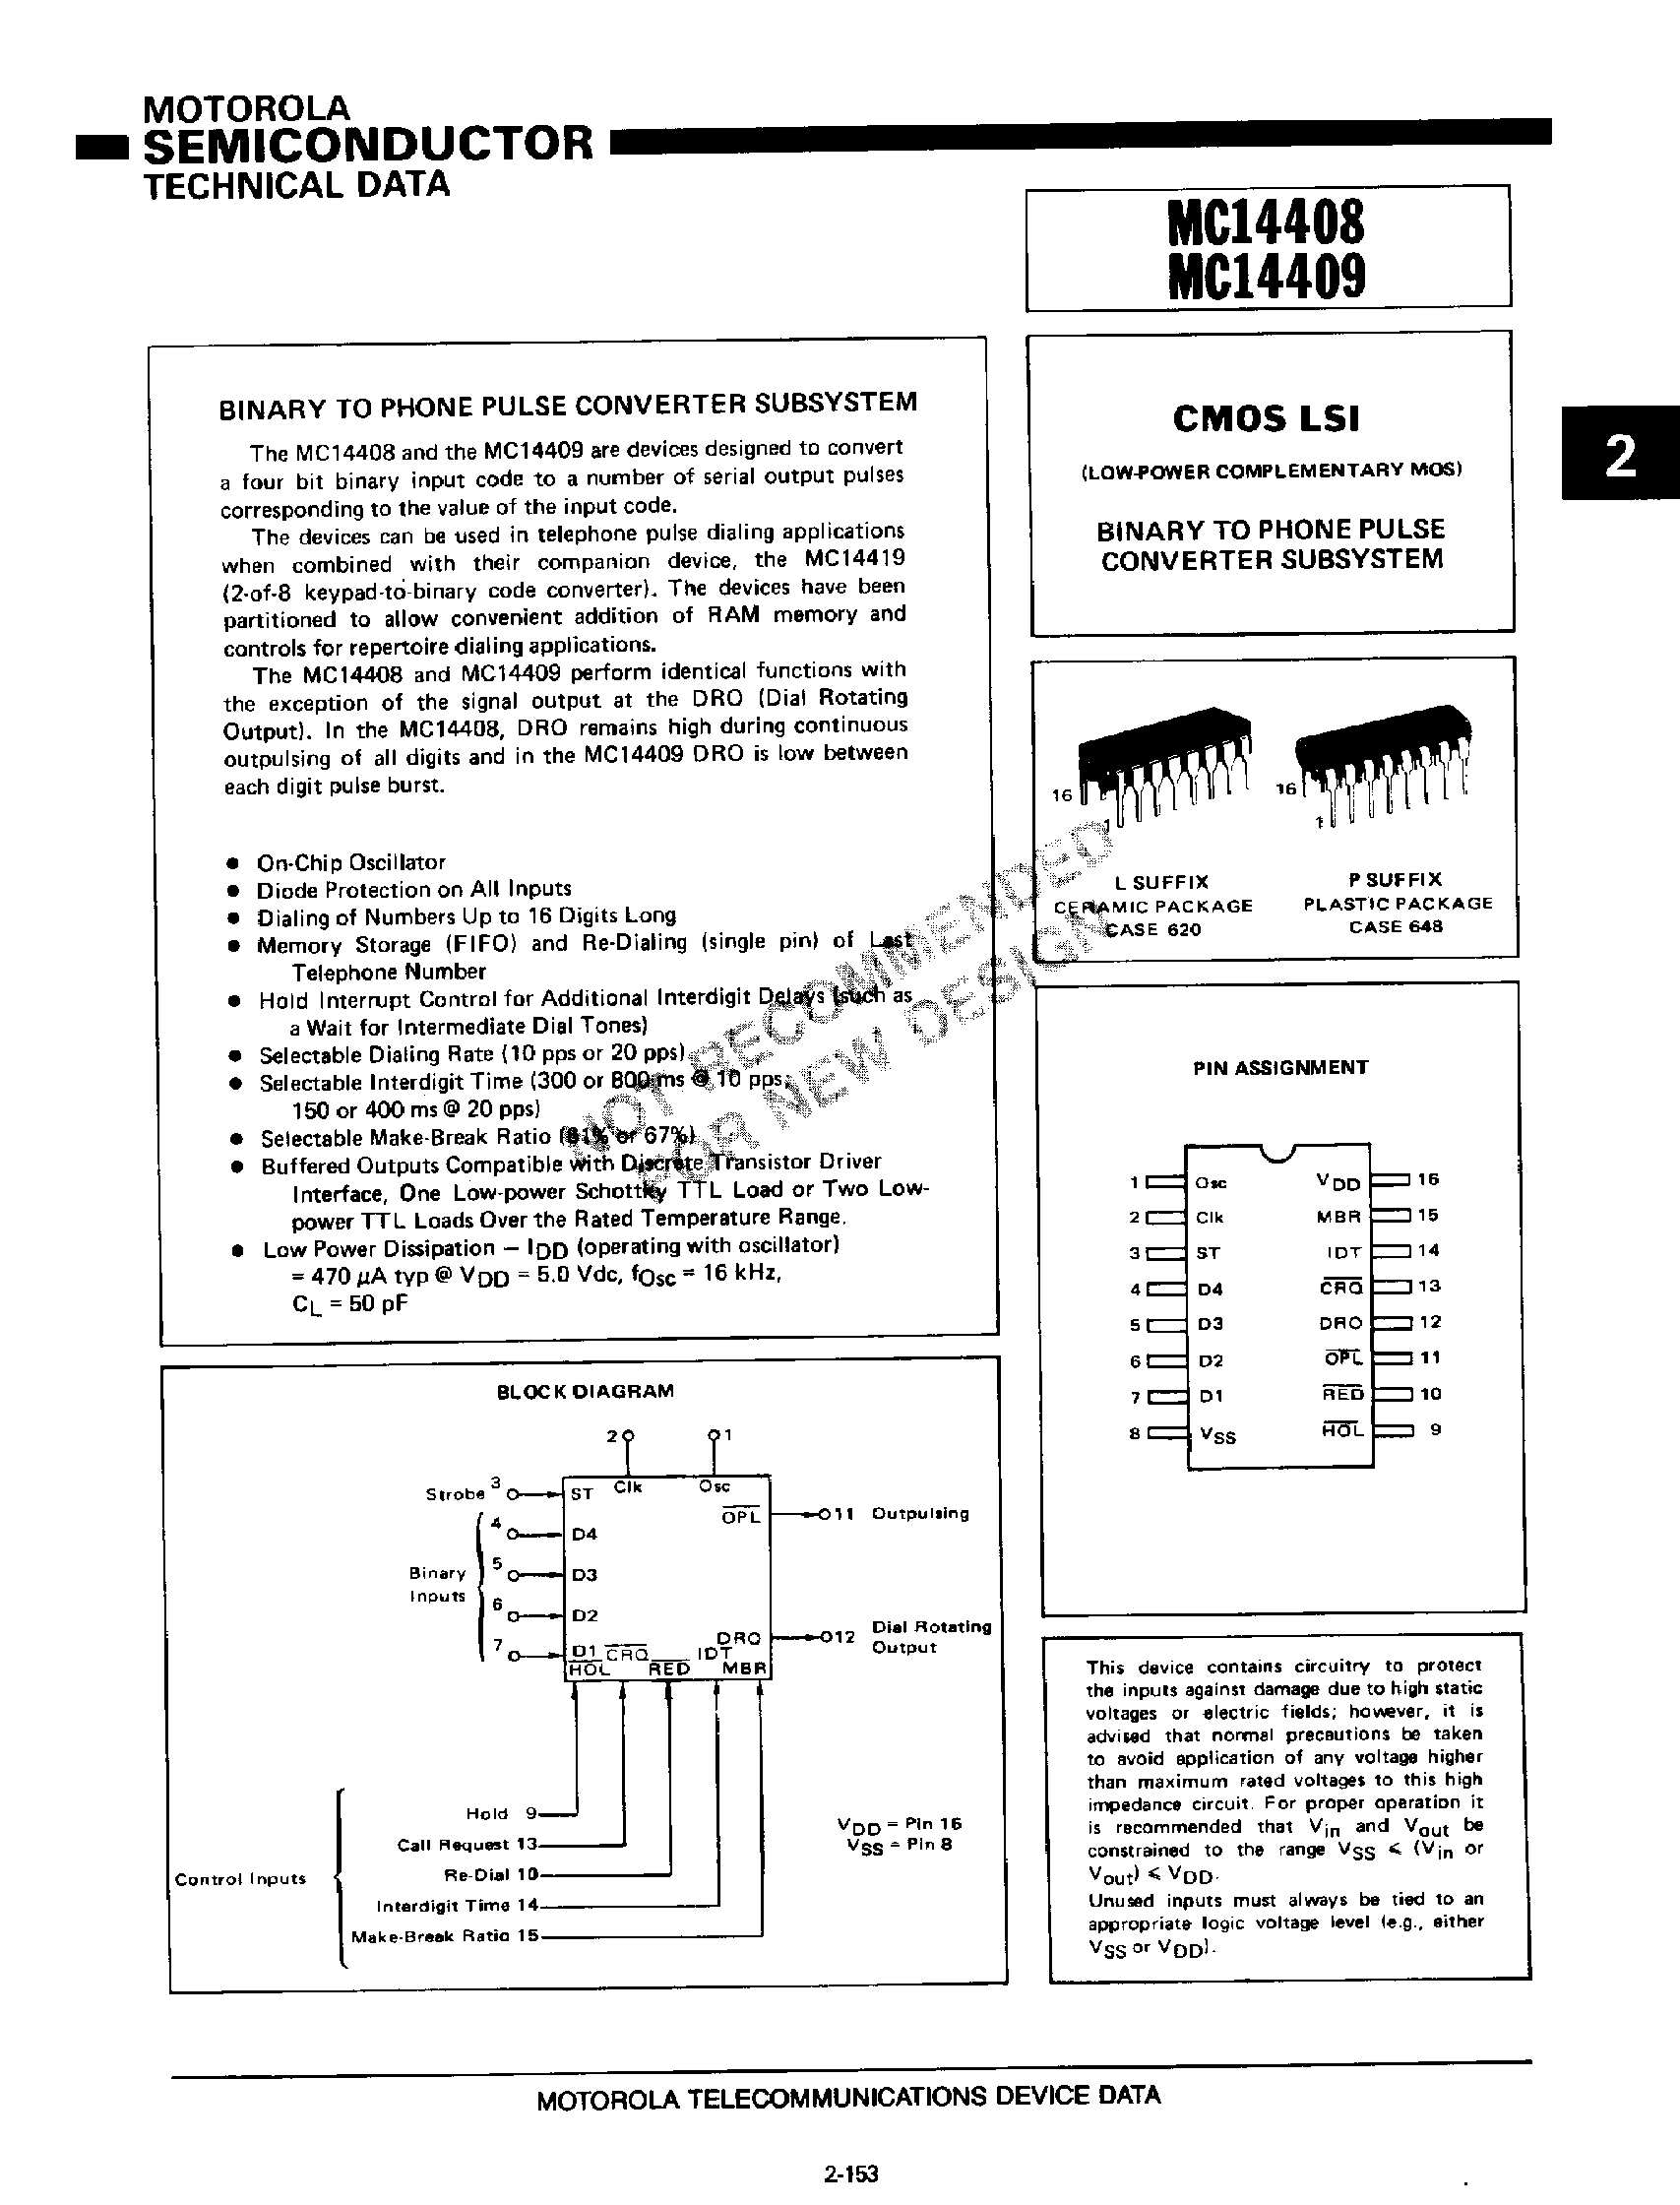 Datasheet MC14408 - (MC14408 / MC14409) CMOS LSI page 1